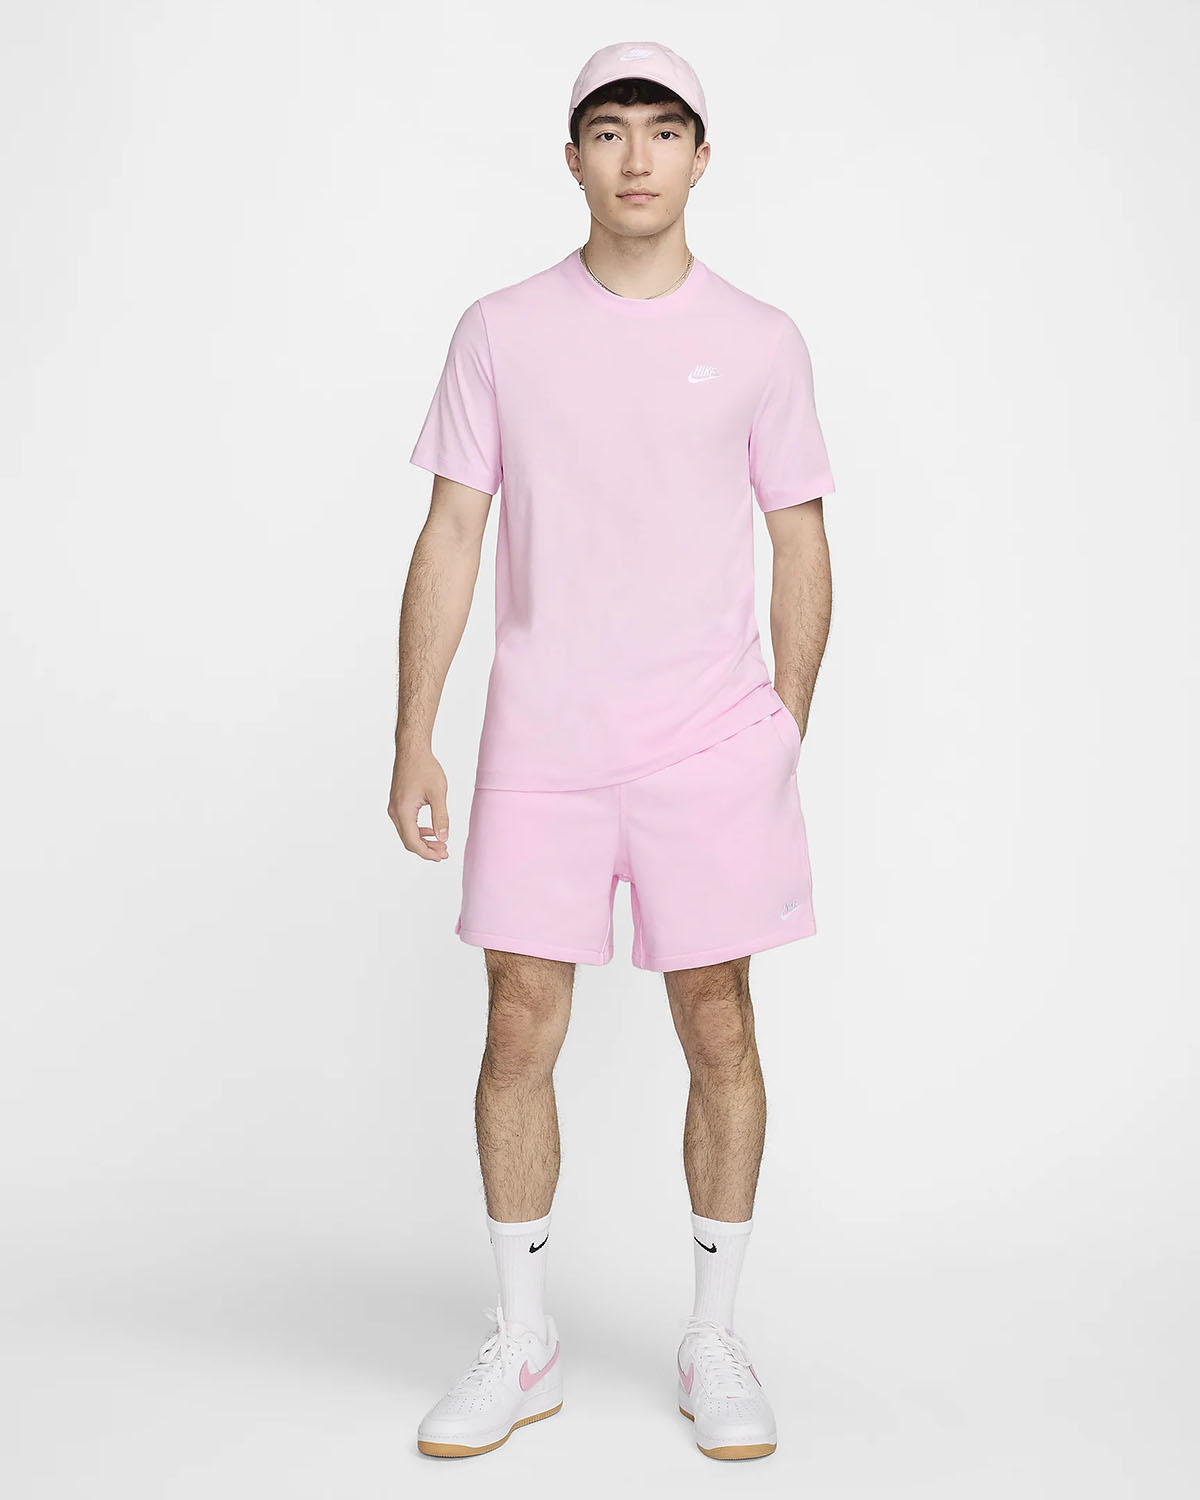 Nike Pink Foam Club Hat Shirt Shorts Sneaker Outfit